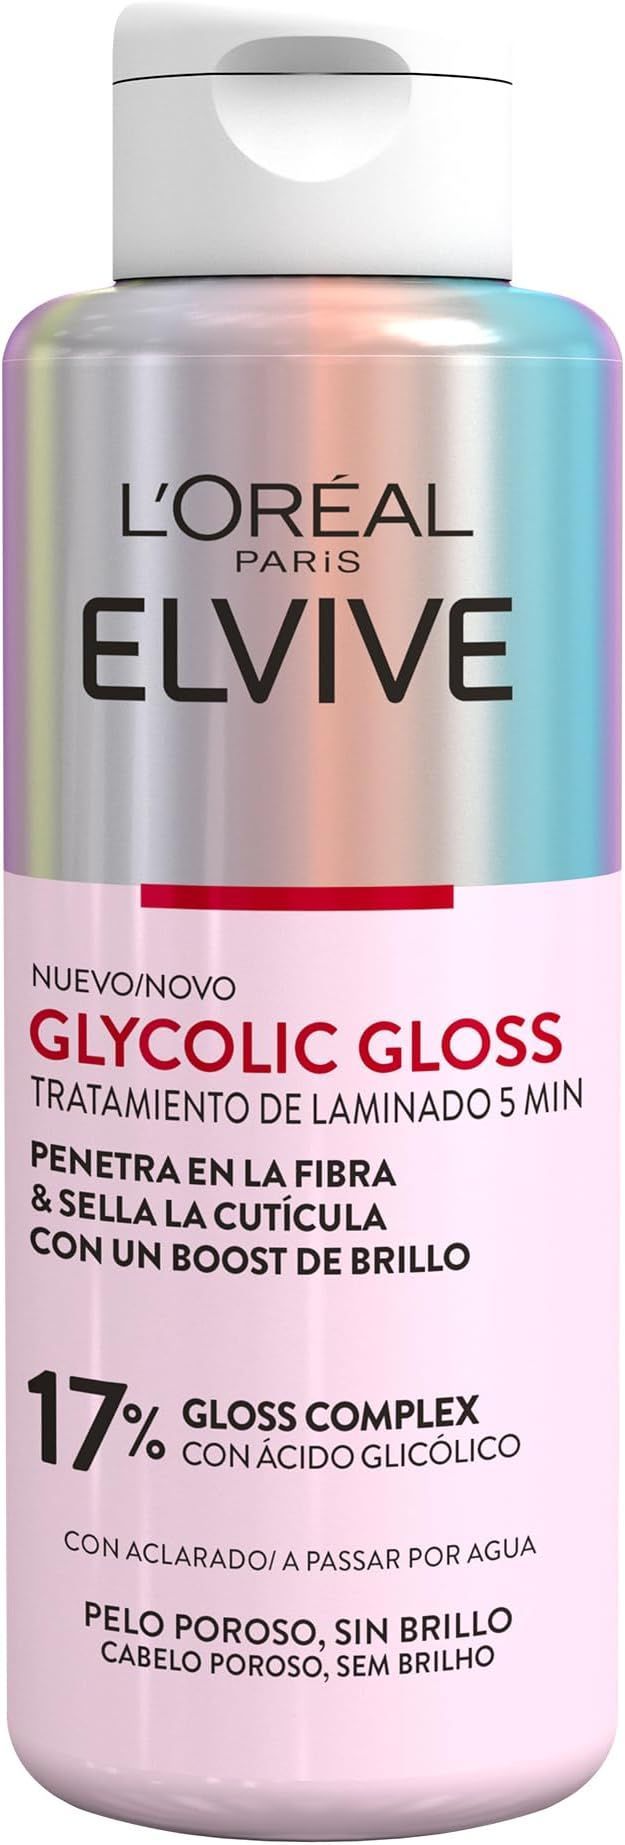 Glycolic Gloss Elvive